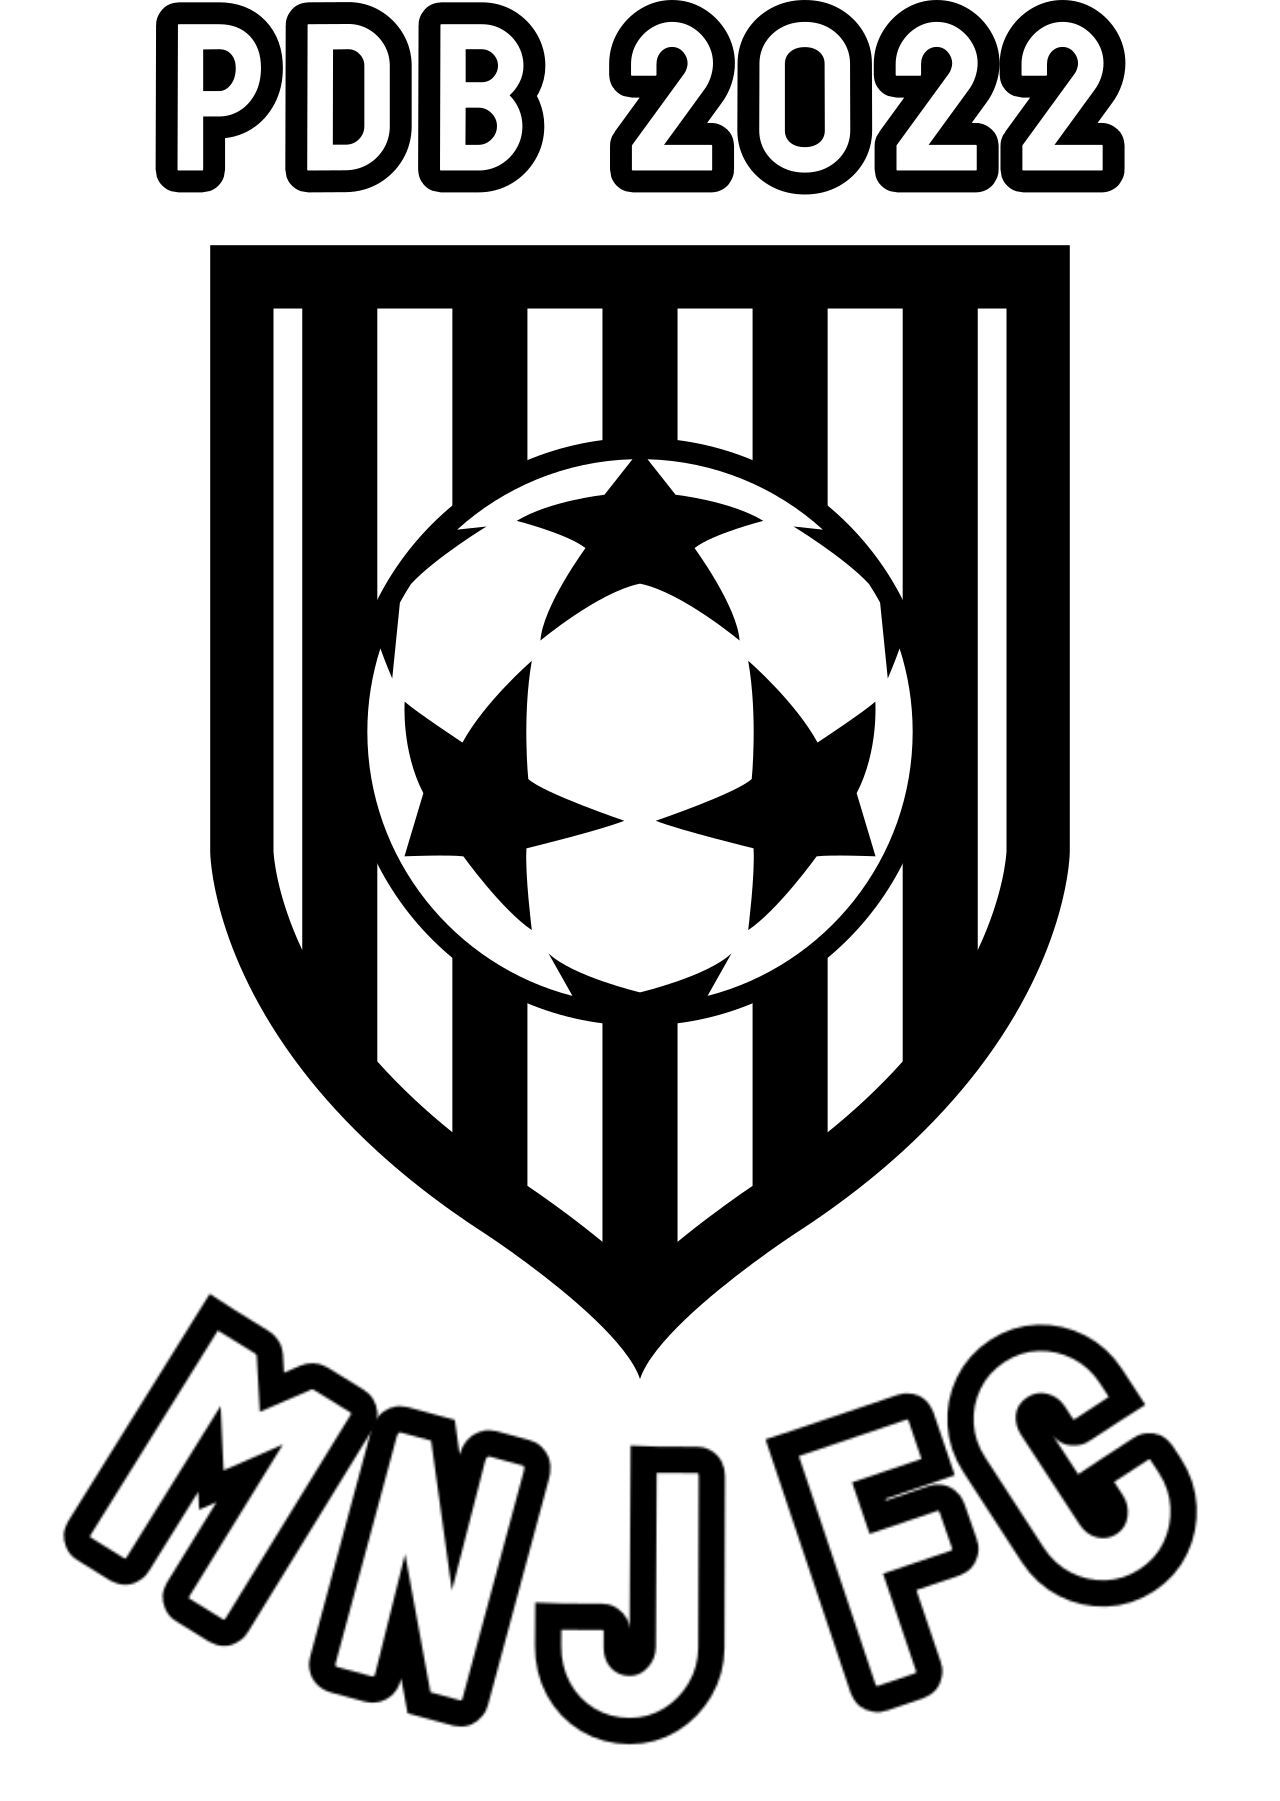 MNJ FC's web page